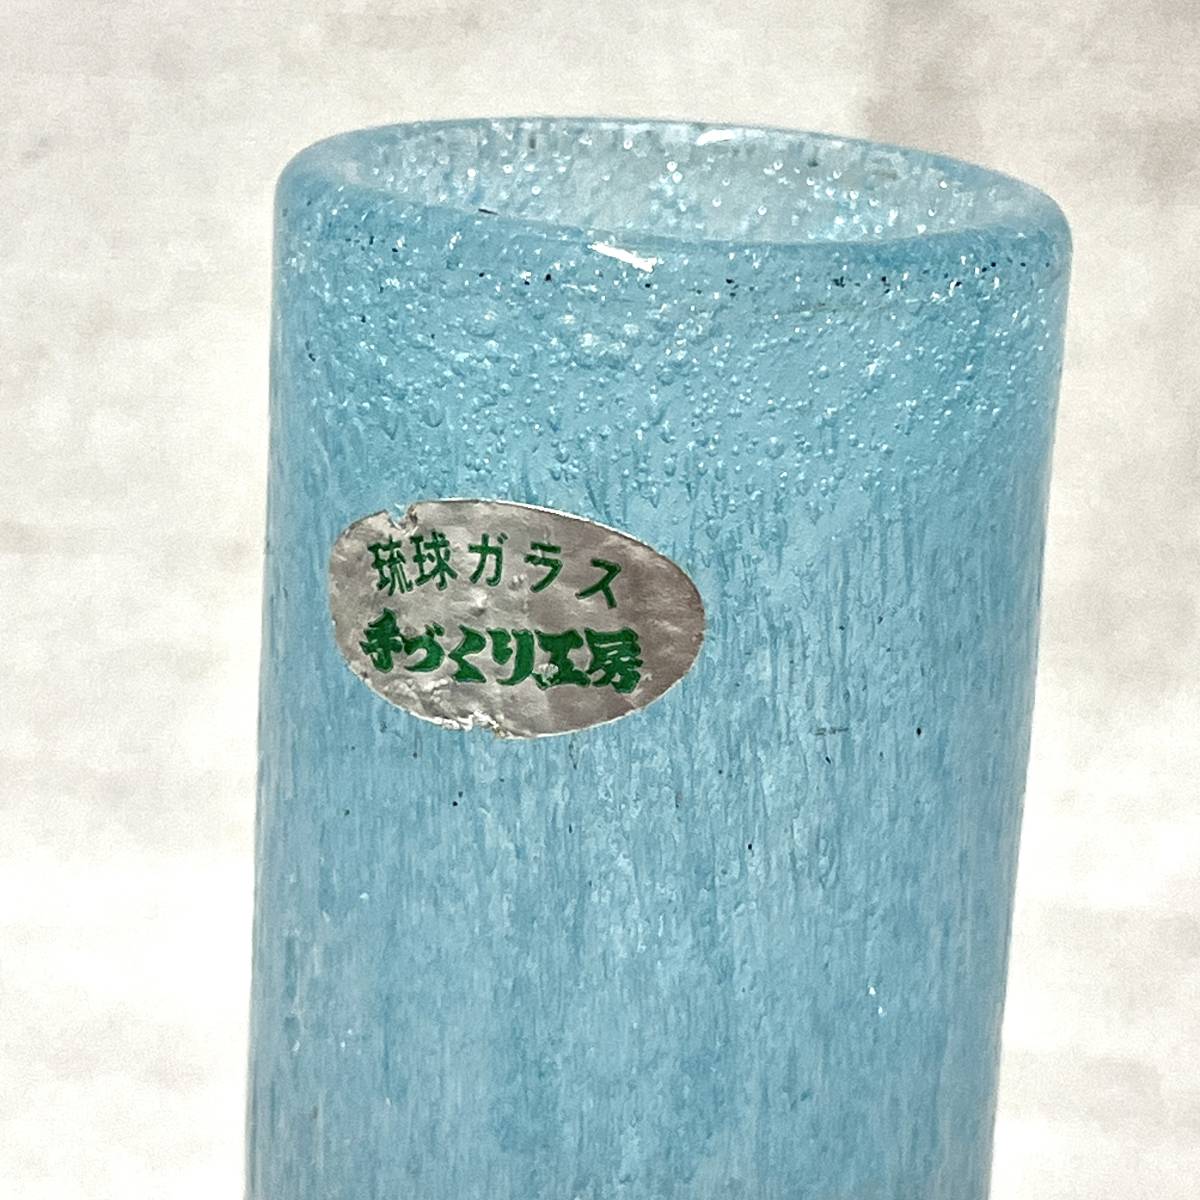  один колесо ... лампочка стекло рука ... ателье бледно-голубой ваза для цветов ваза цветок основа (3716)